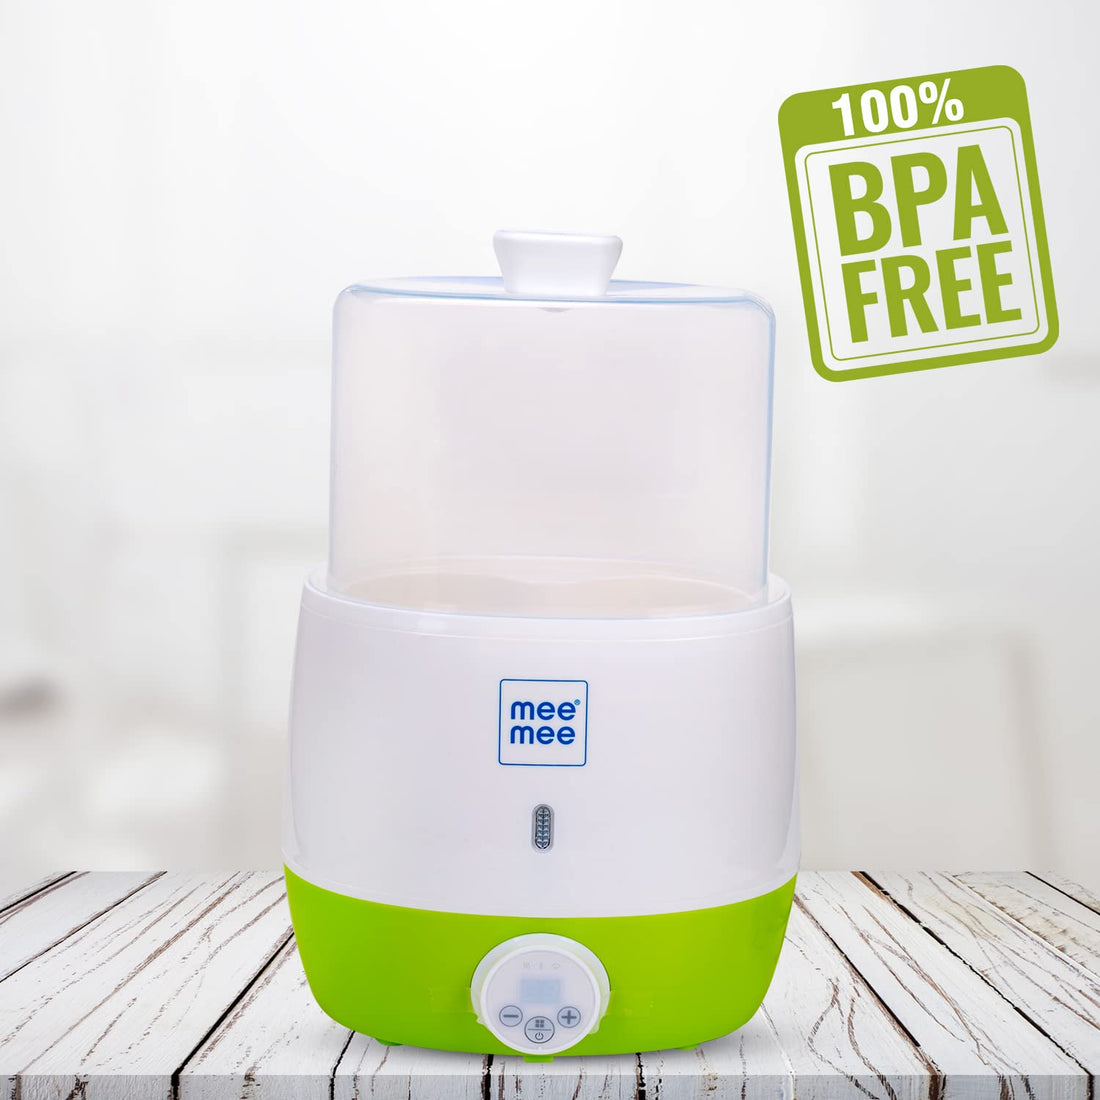 Mee Mee - Steam Digital Sterilizer with 100% BPA free